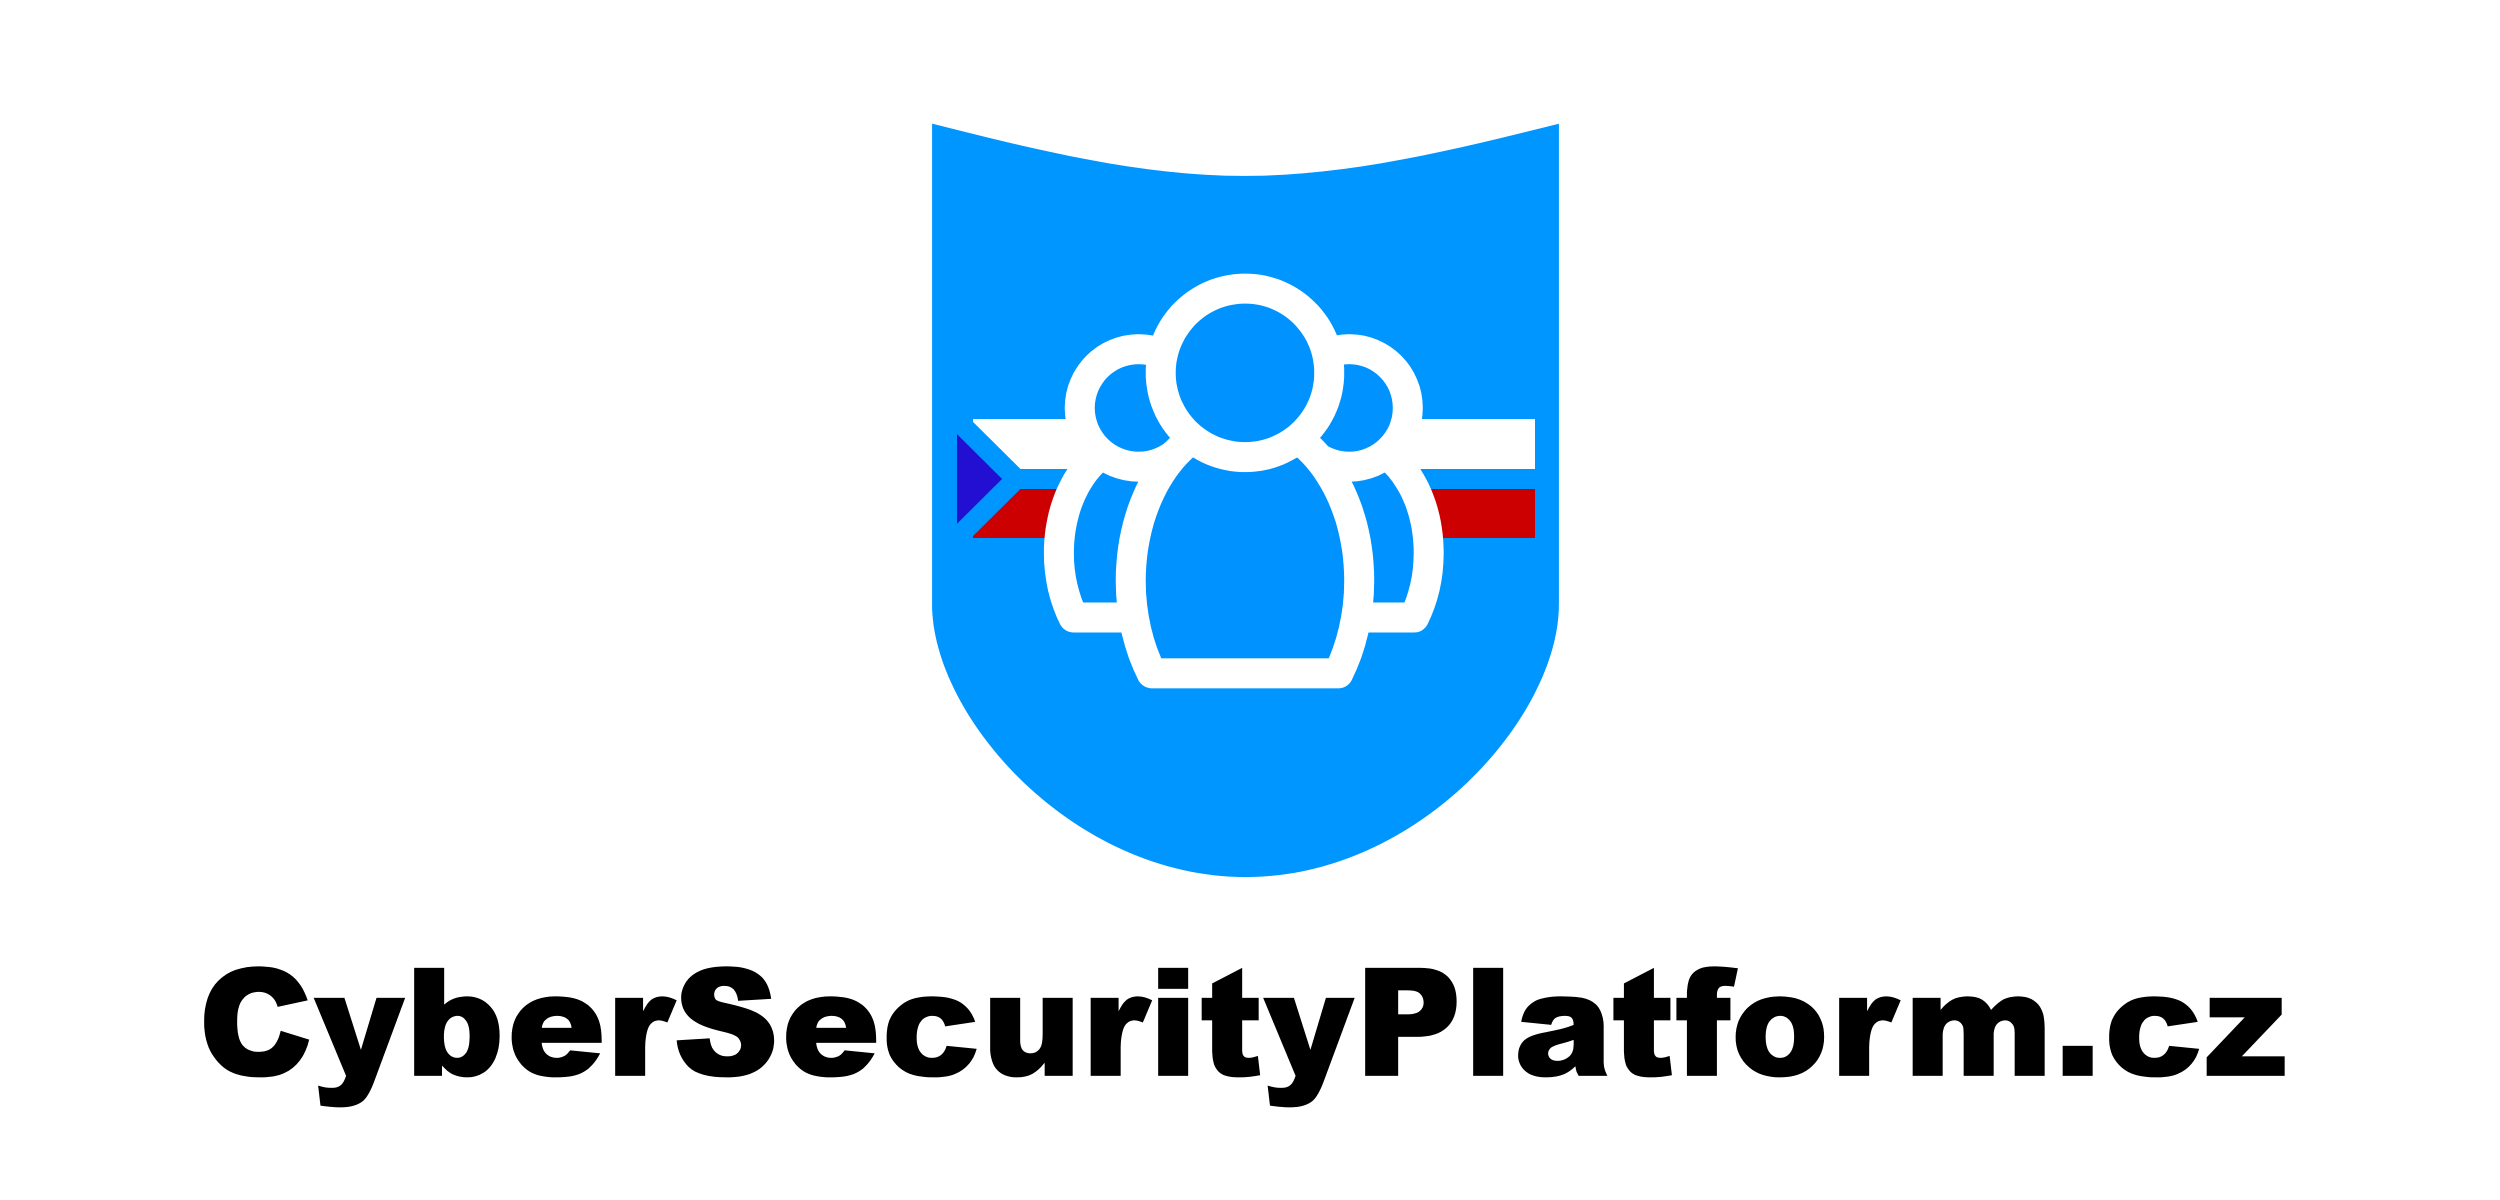 CyberSecurityPlatform logo